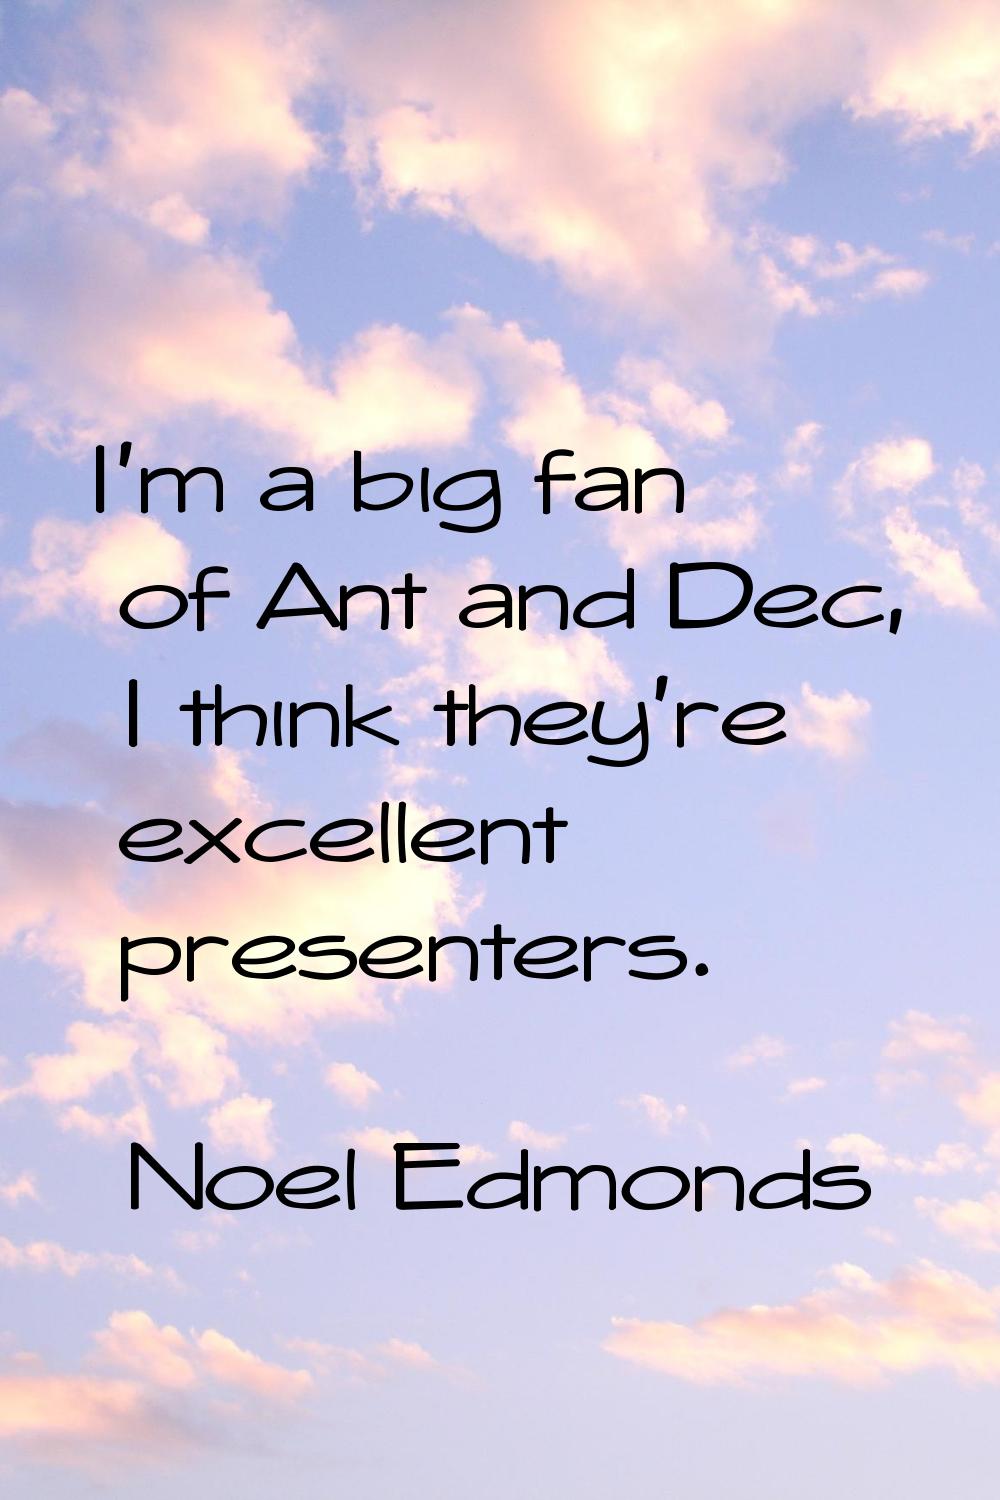 I'm a big fan of Ant and Dec, I think they're excellent presenters.